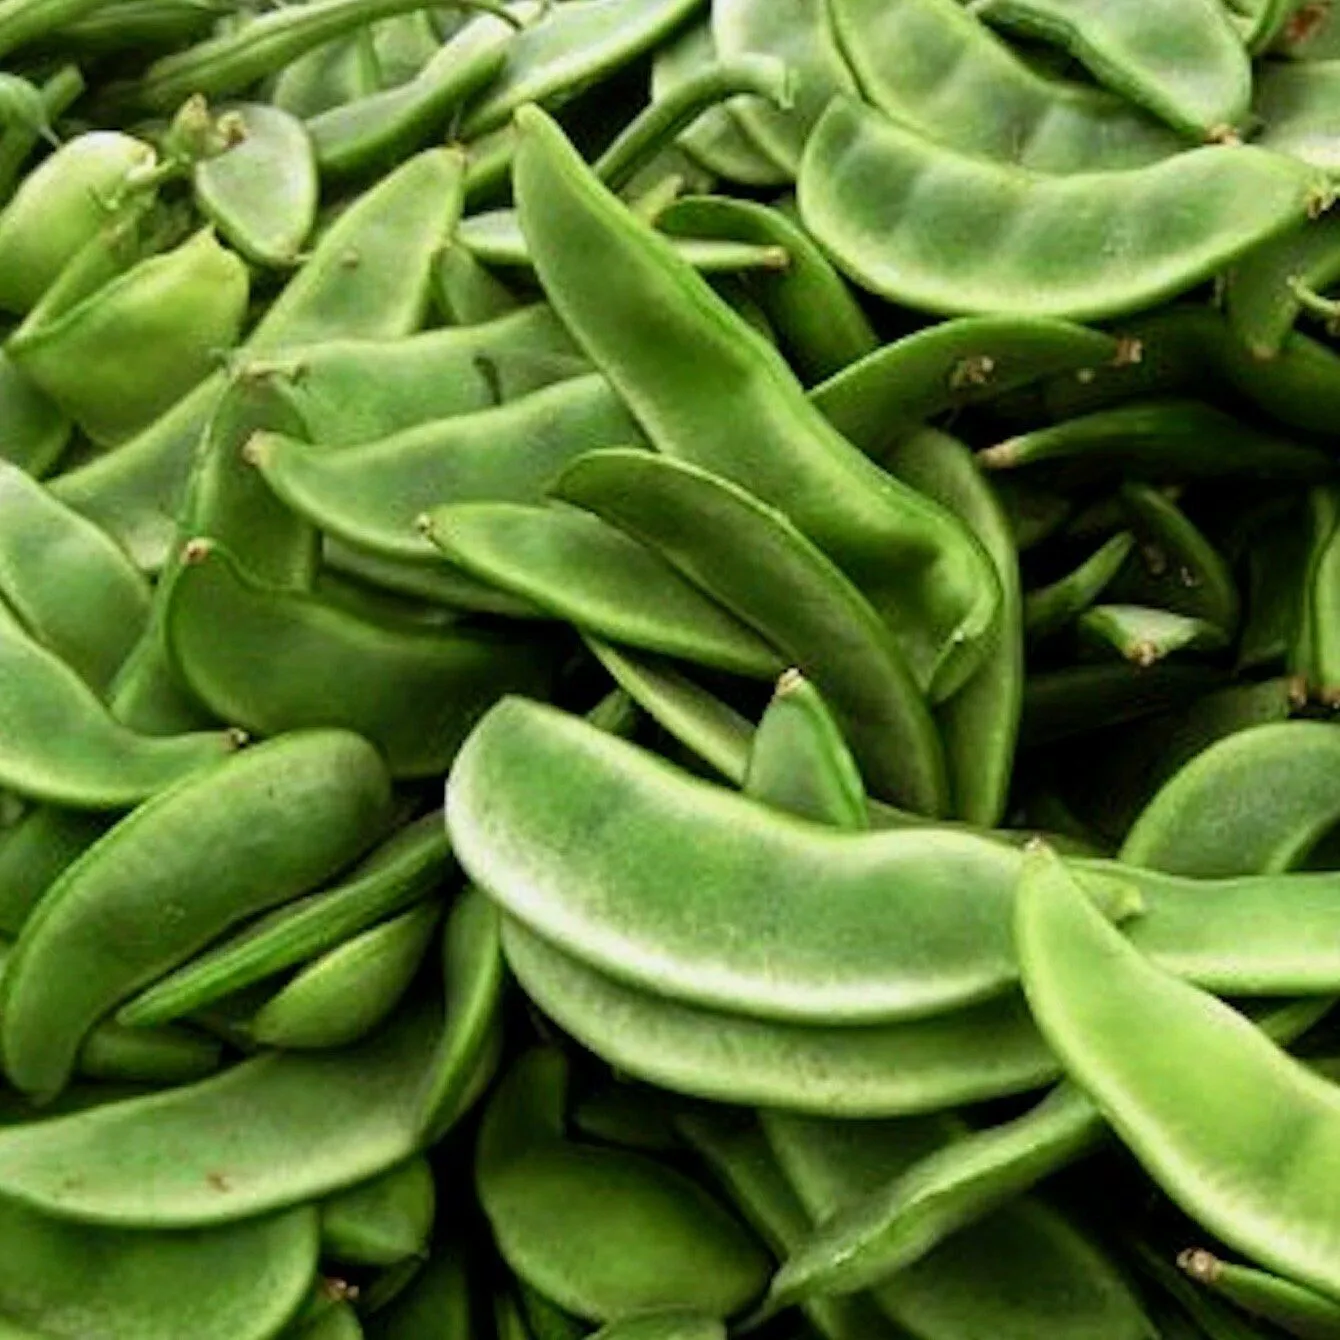 Burpee Improved Lima Bean 100 Seeds NON GMO - $16.54